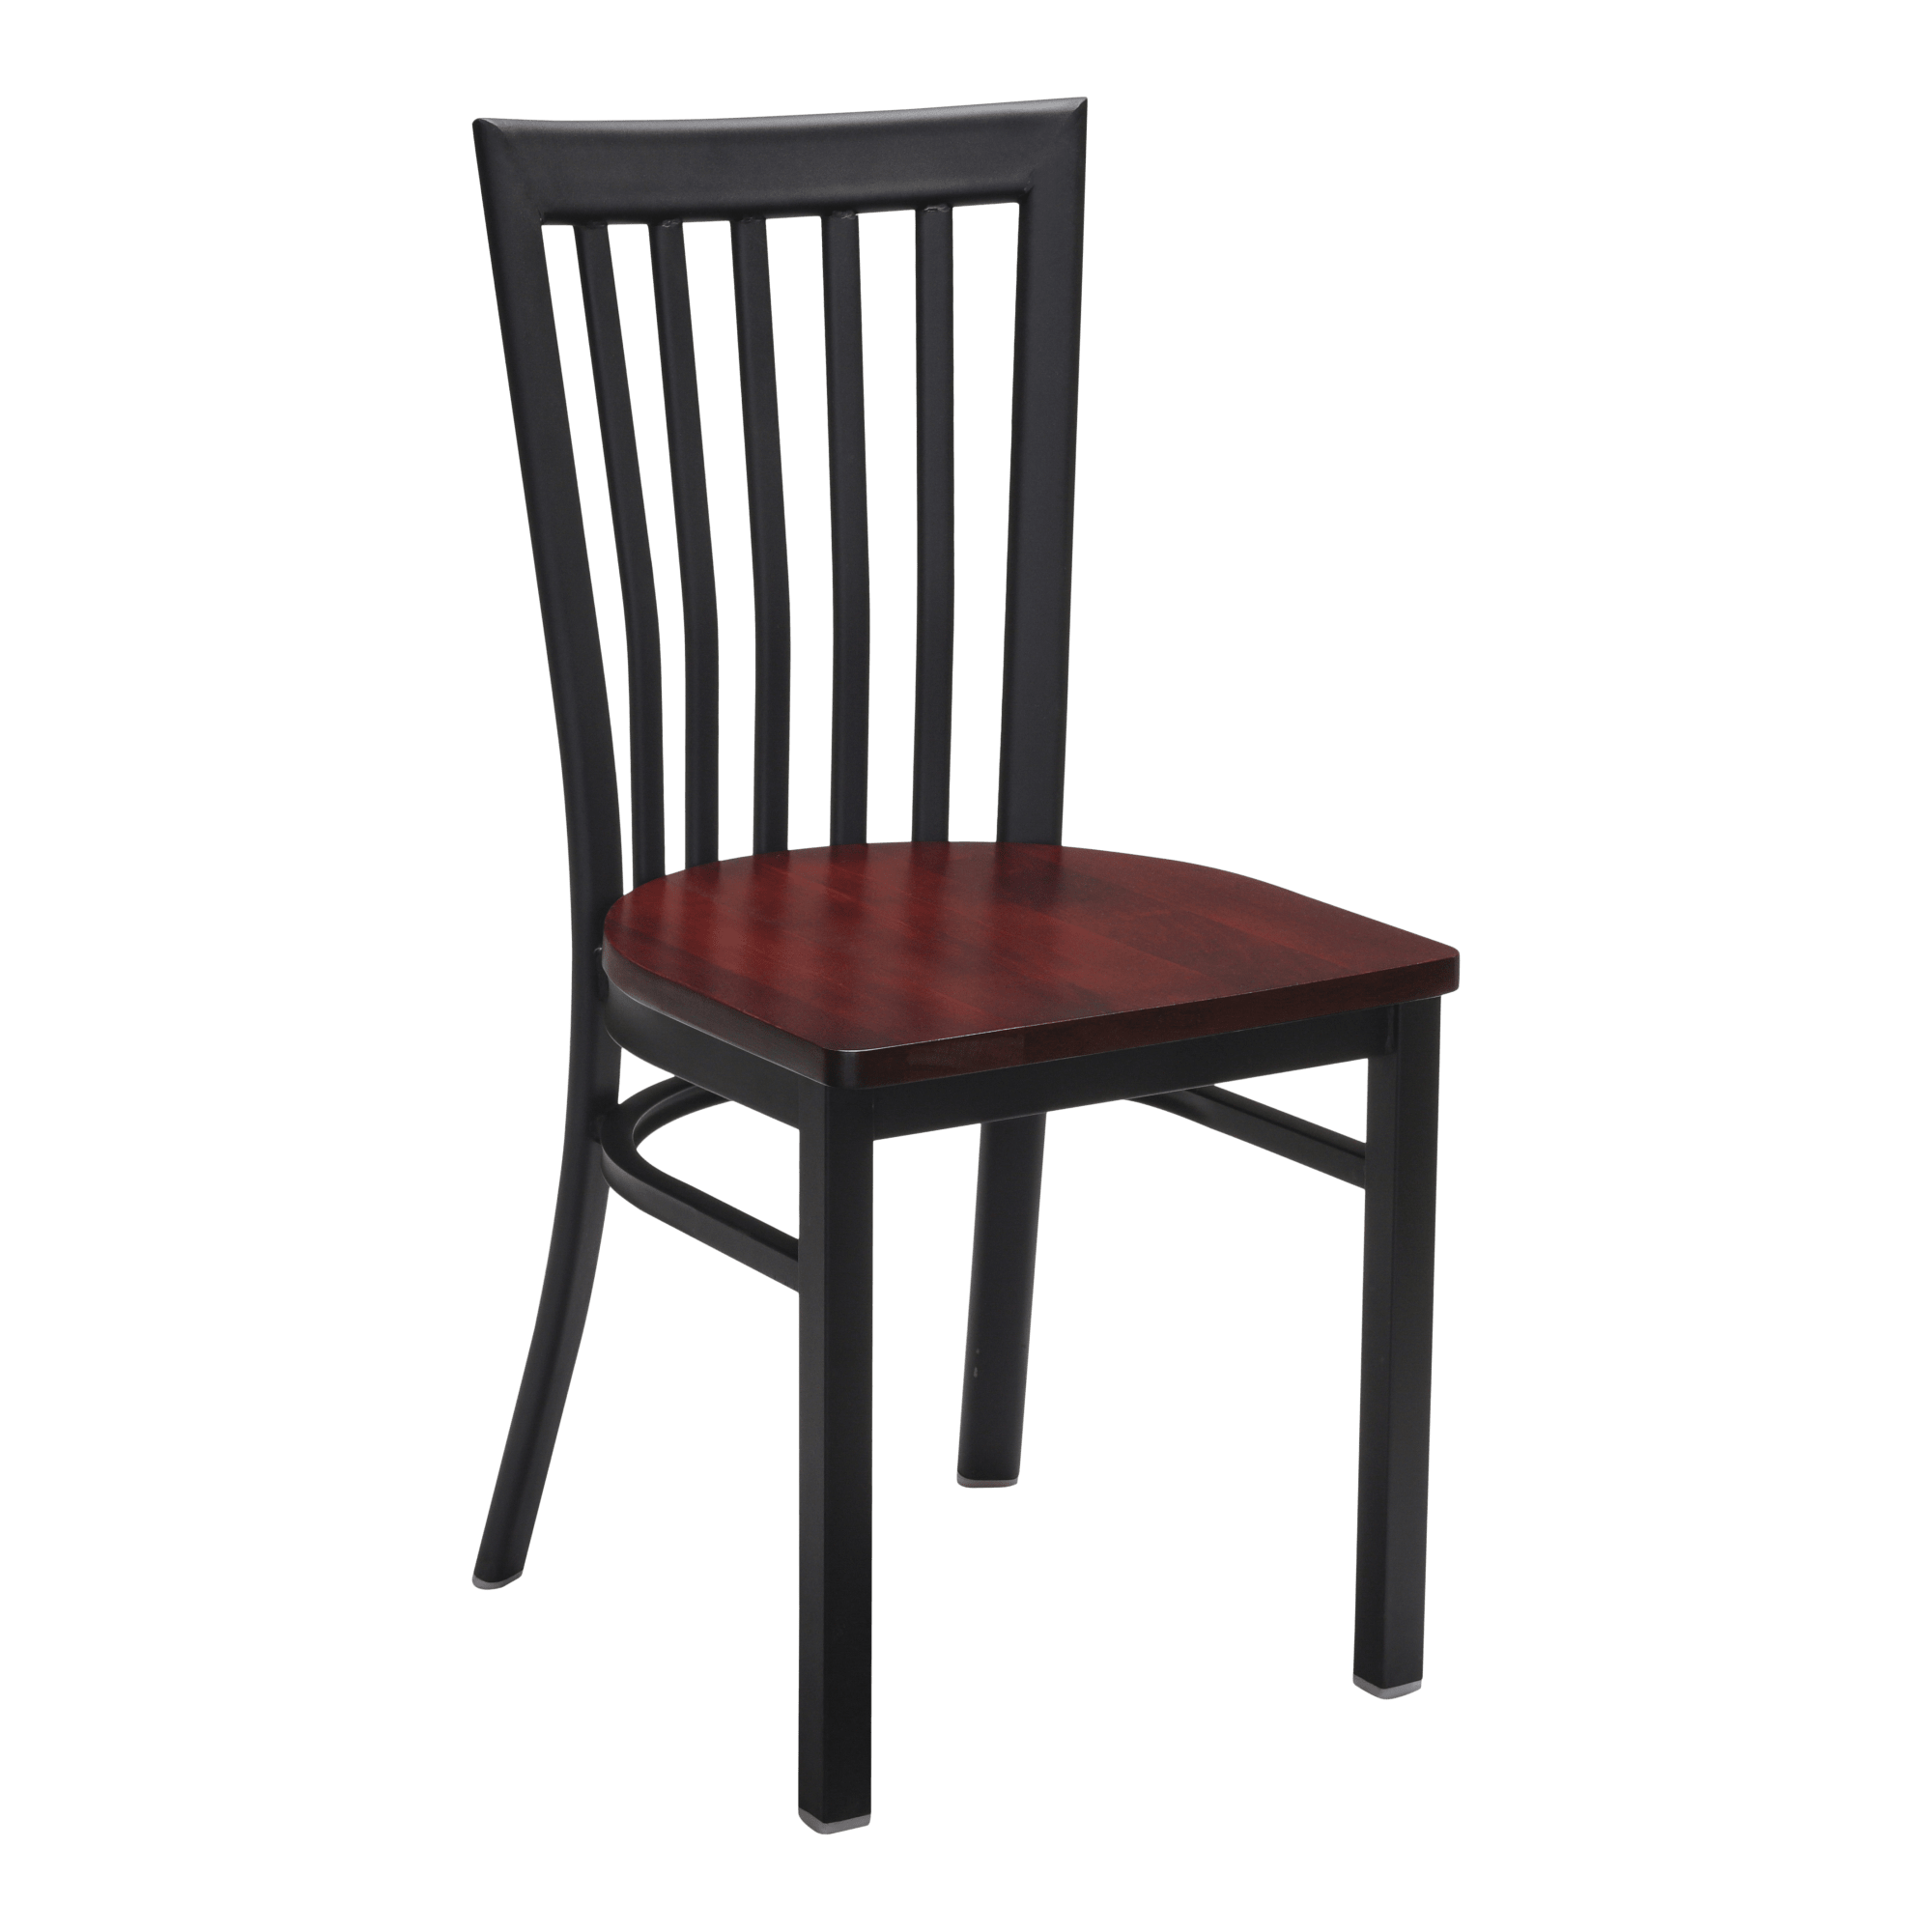 Elongated Vertical Slat Back Restaurant Metal Chair